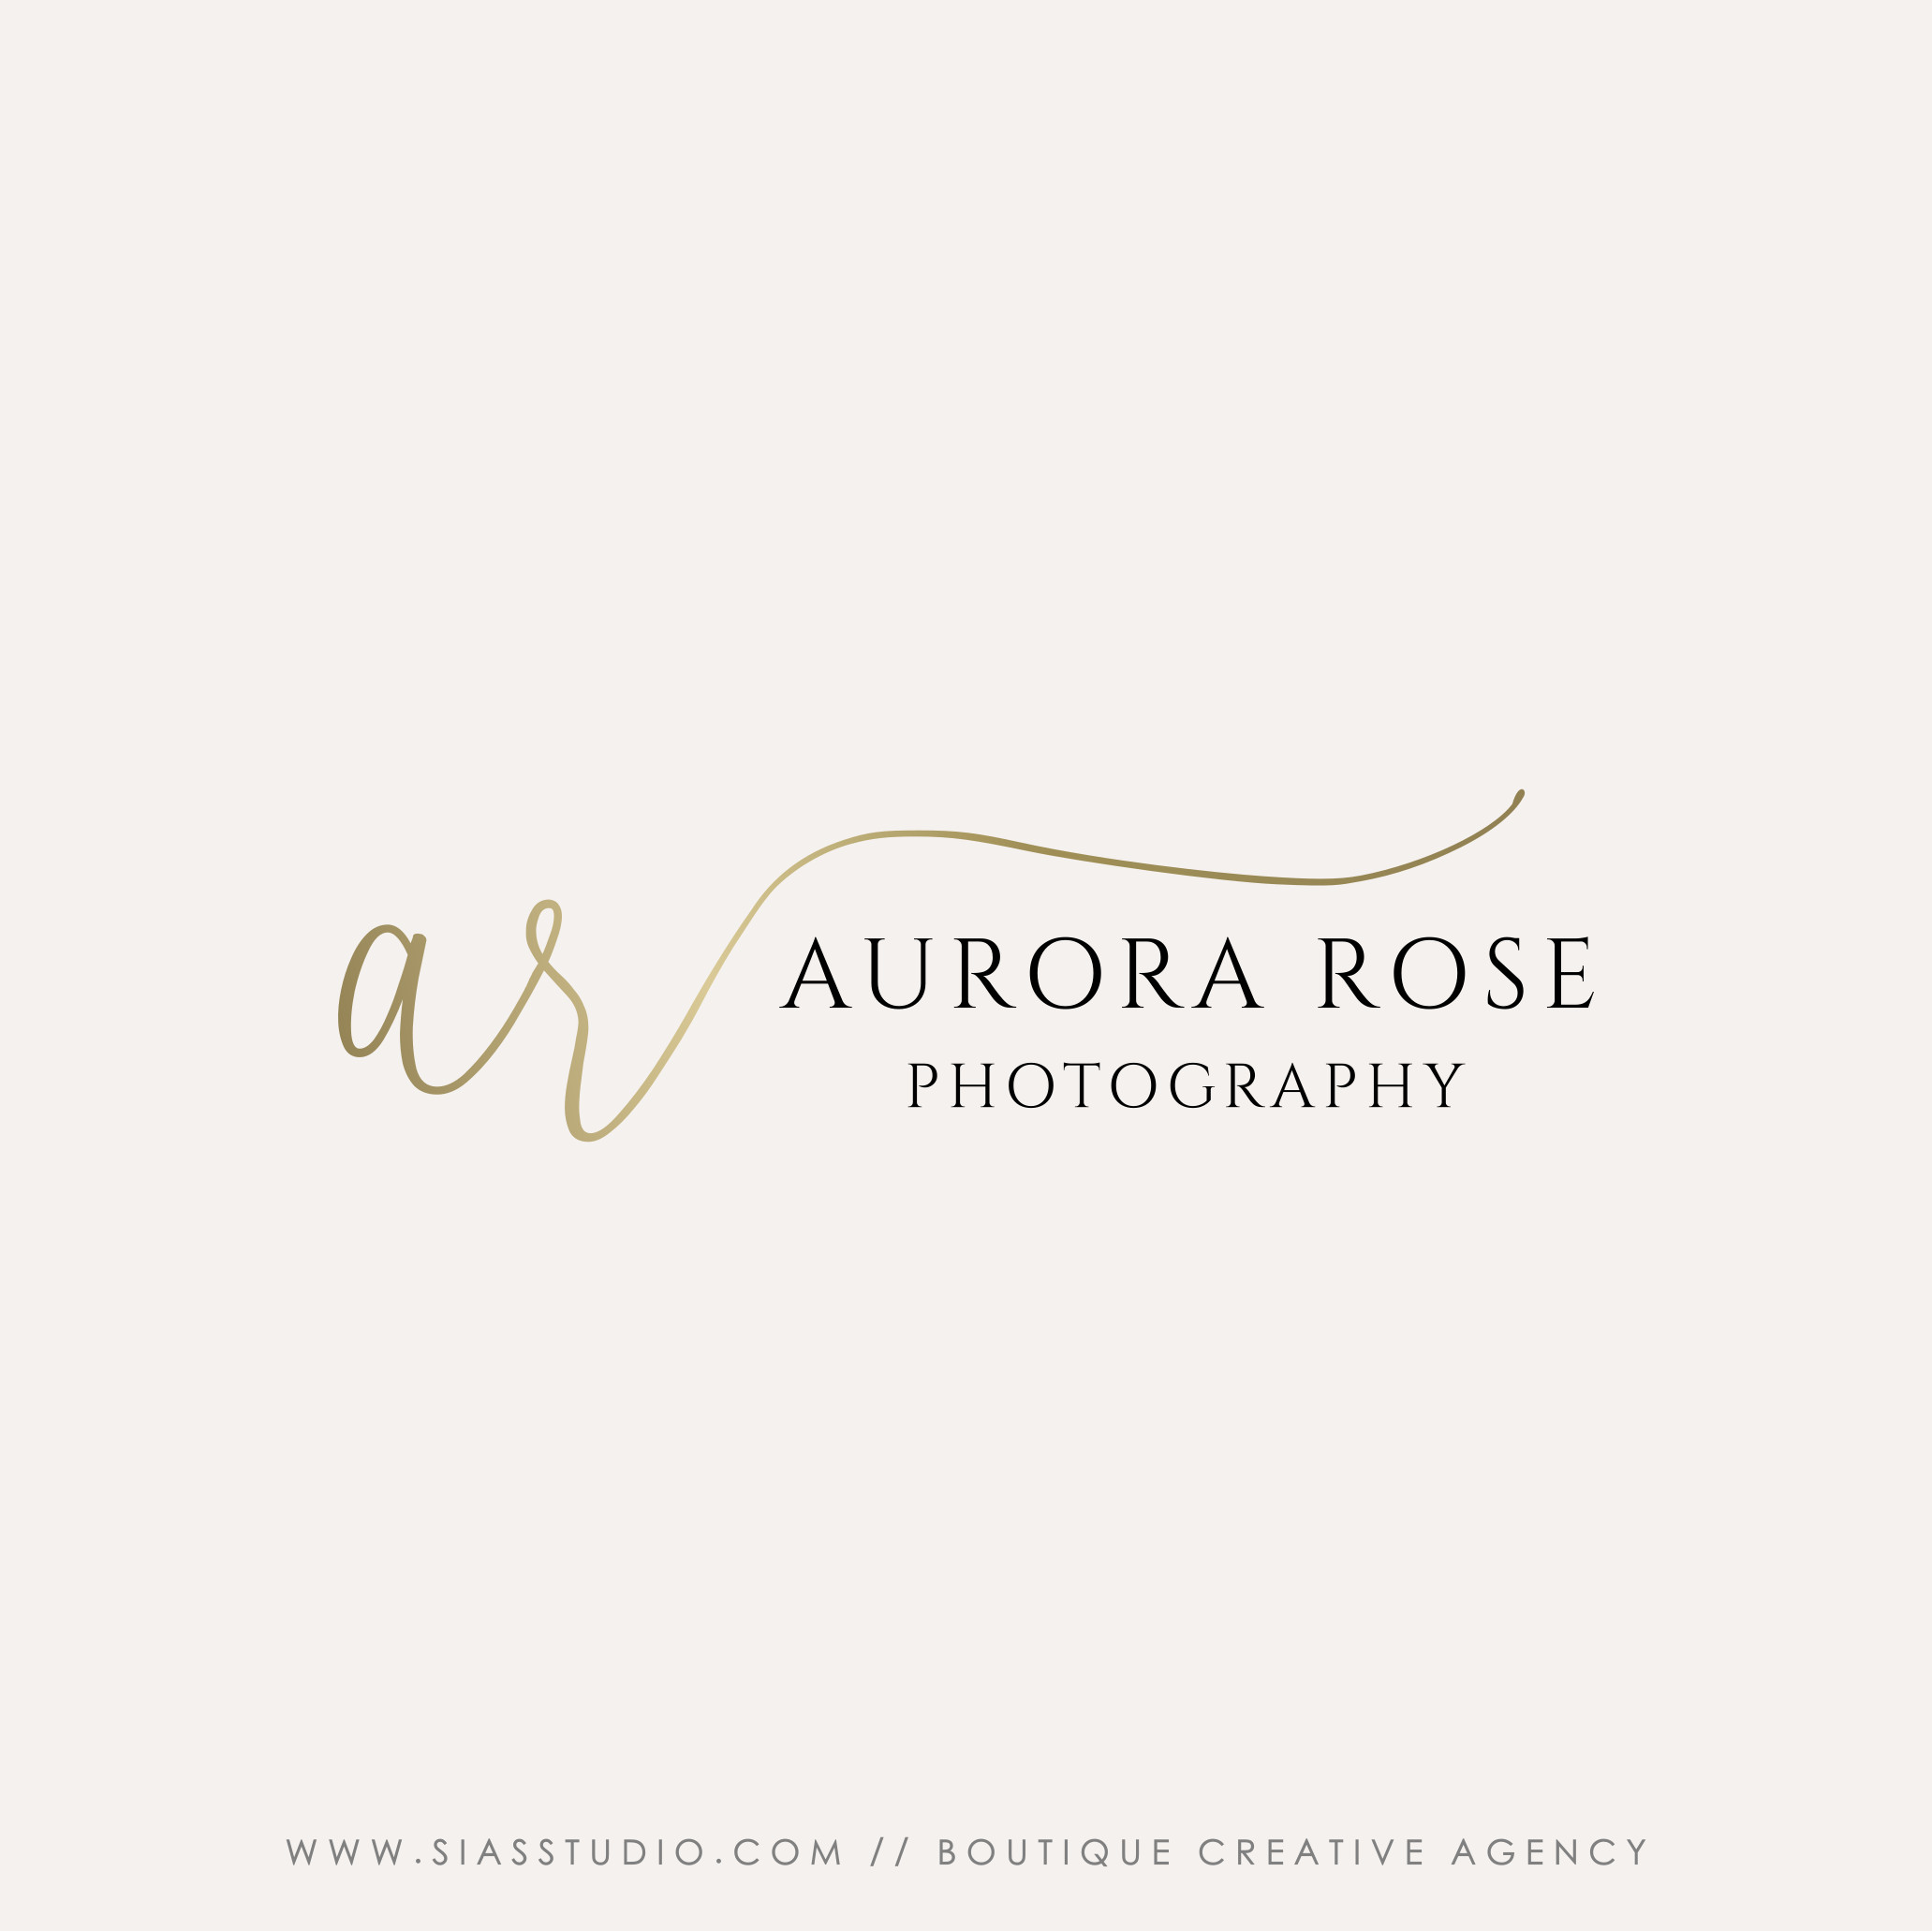 https://www.siasstudio.com/en/wp-content/uploads/2021/11/Sias-Studio-Aurora-Rose-Photography-logo-design-Colored-version.jpg